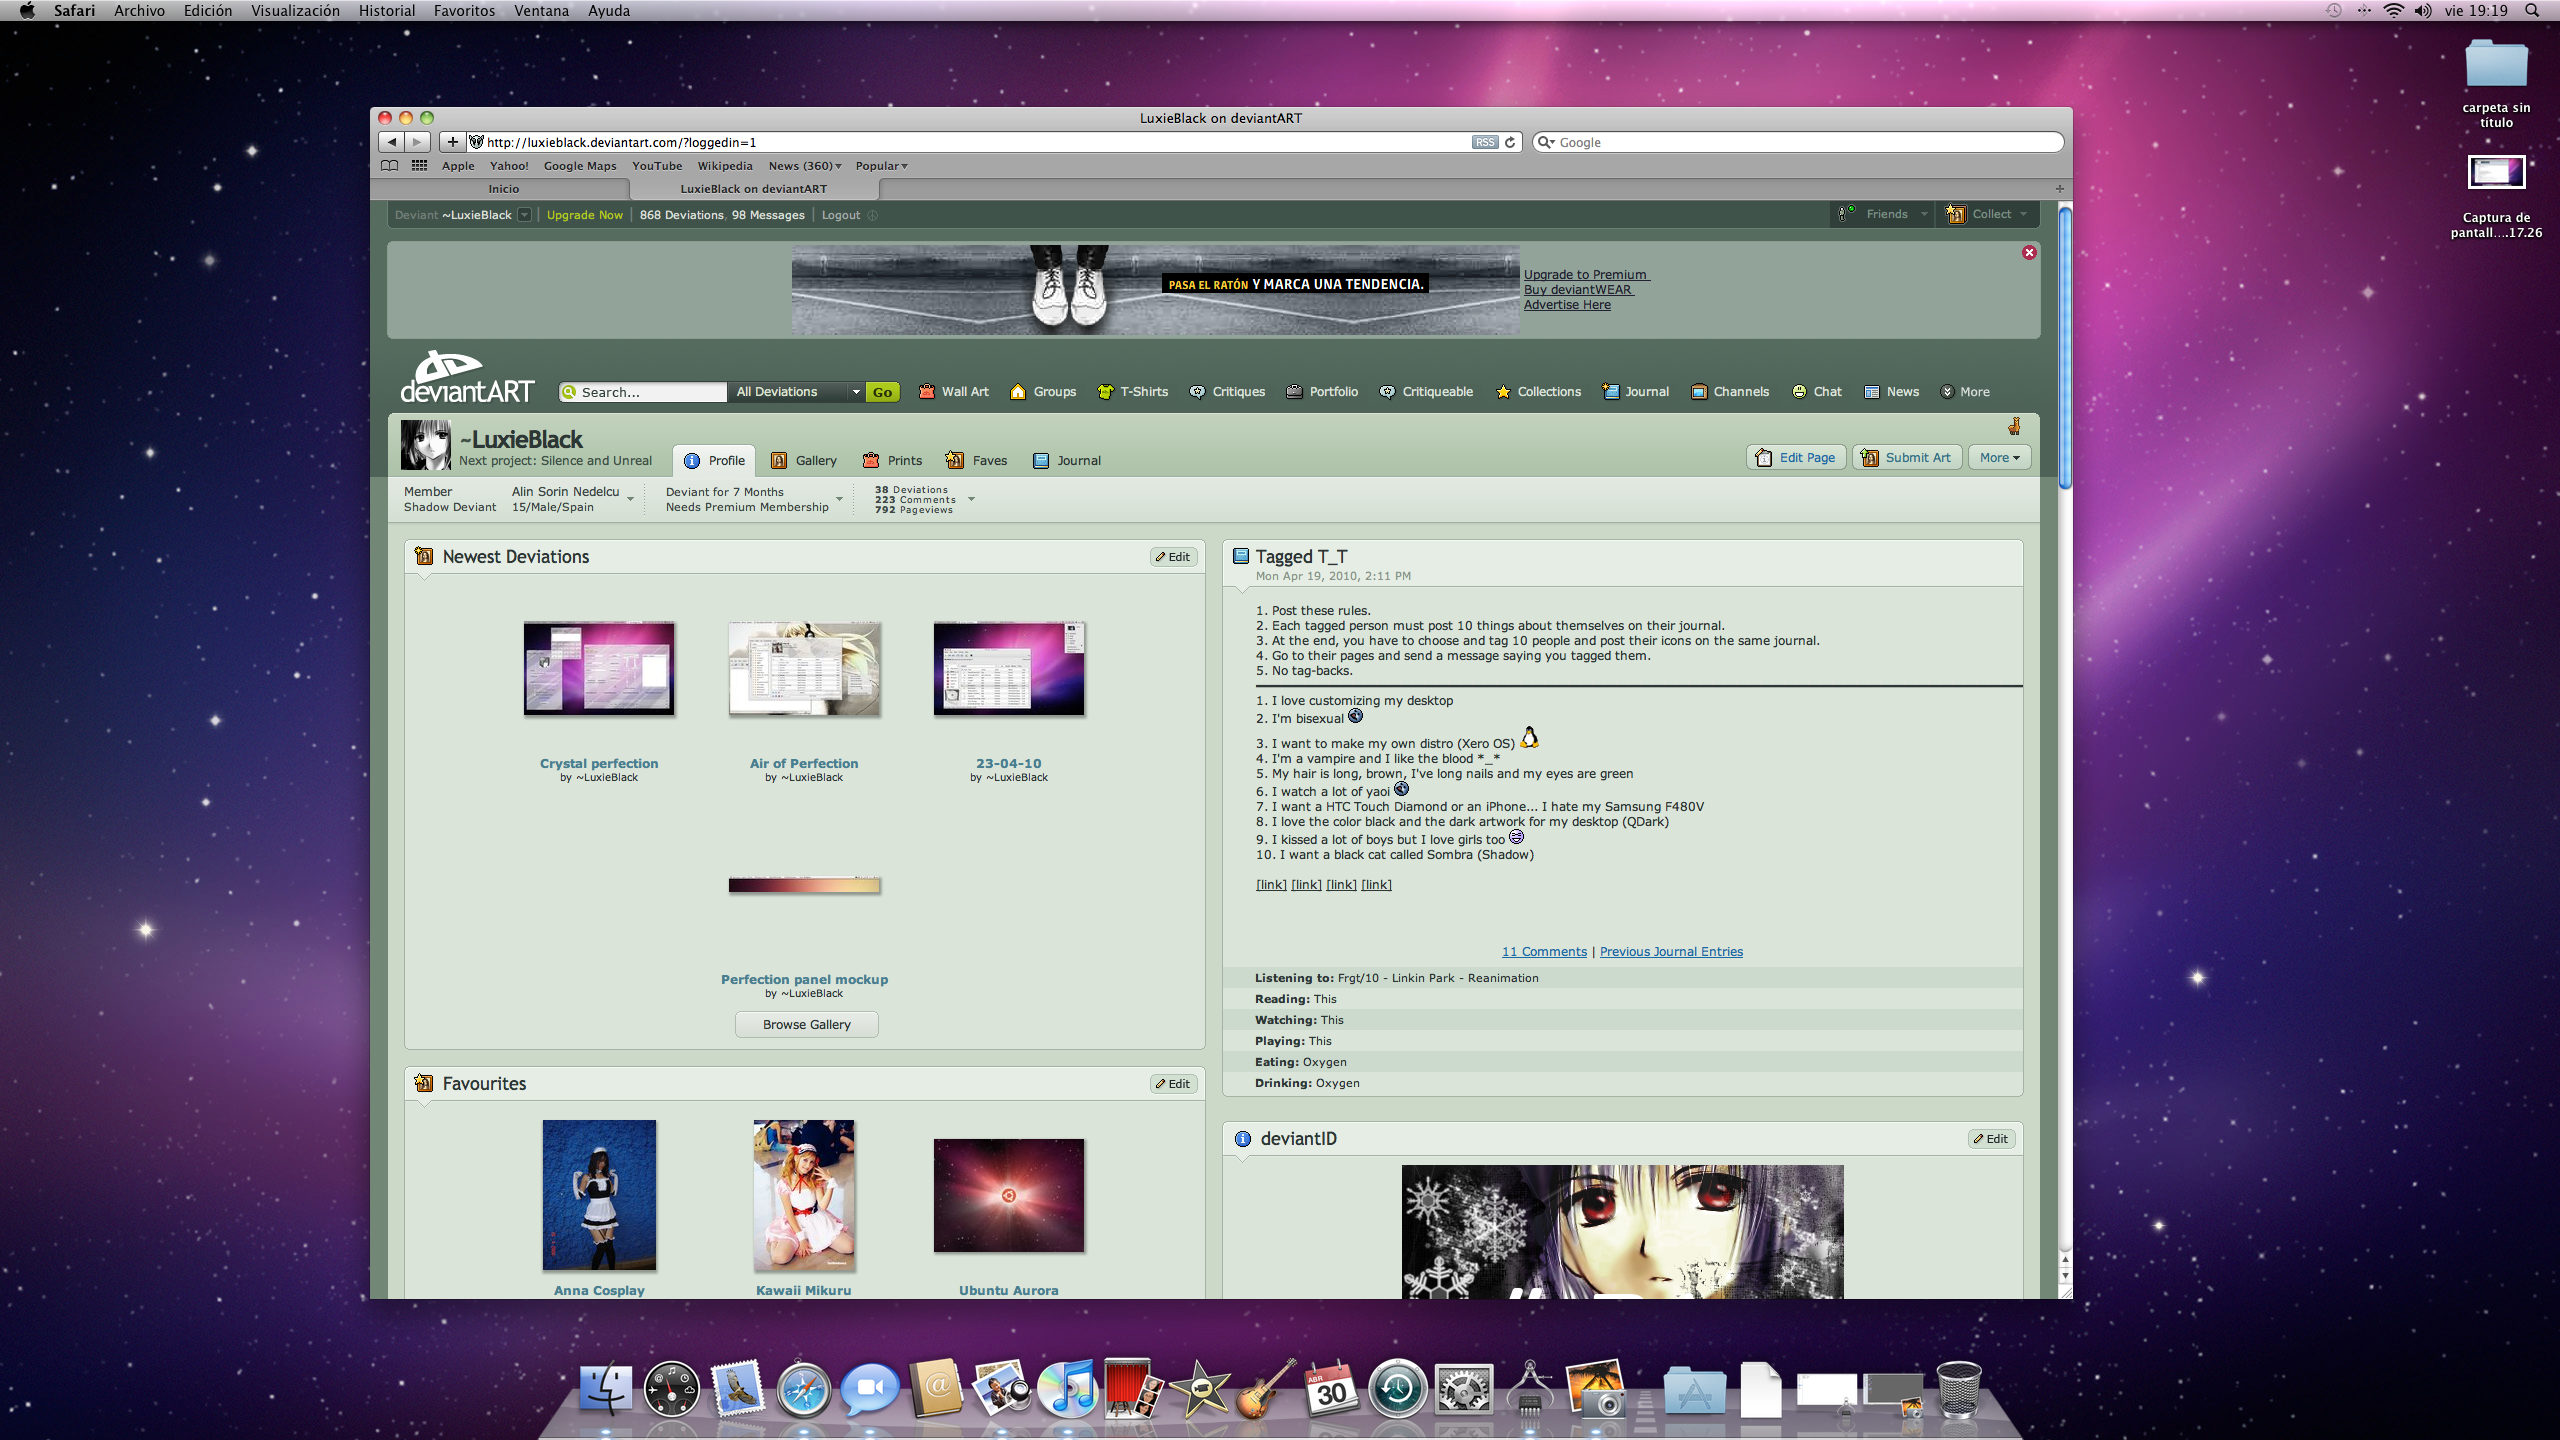 Mac Os X Snow Leopard 10.6 8 Free Download